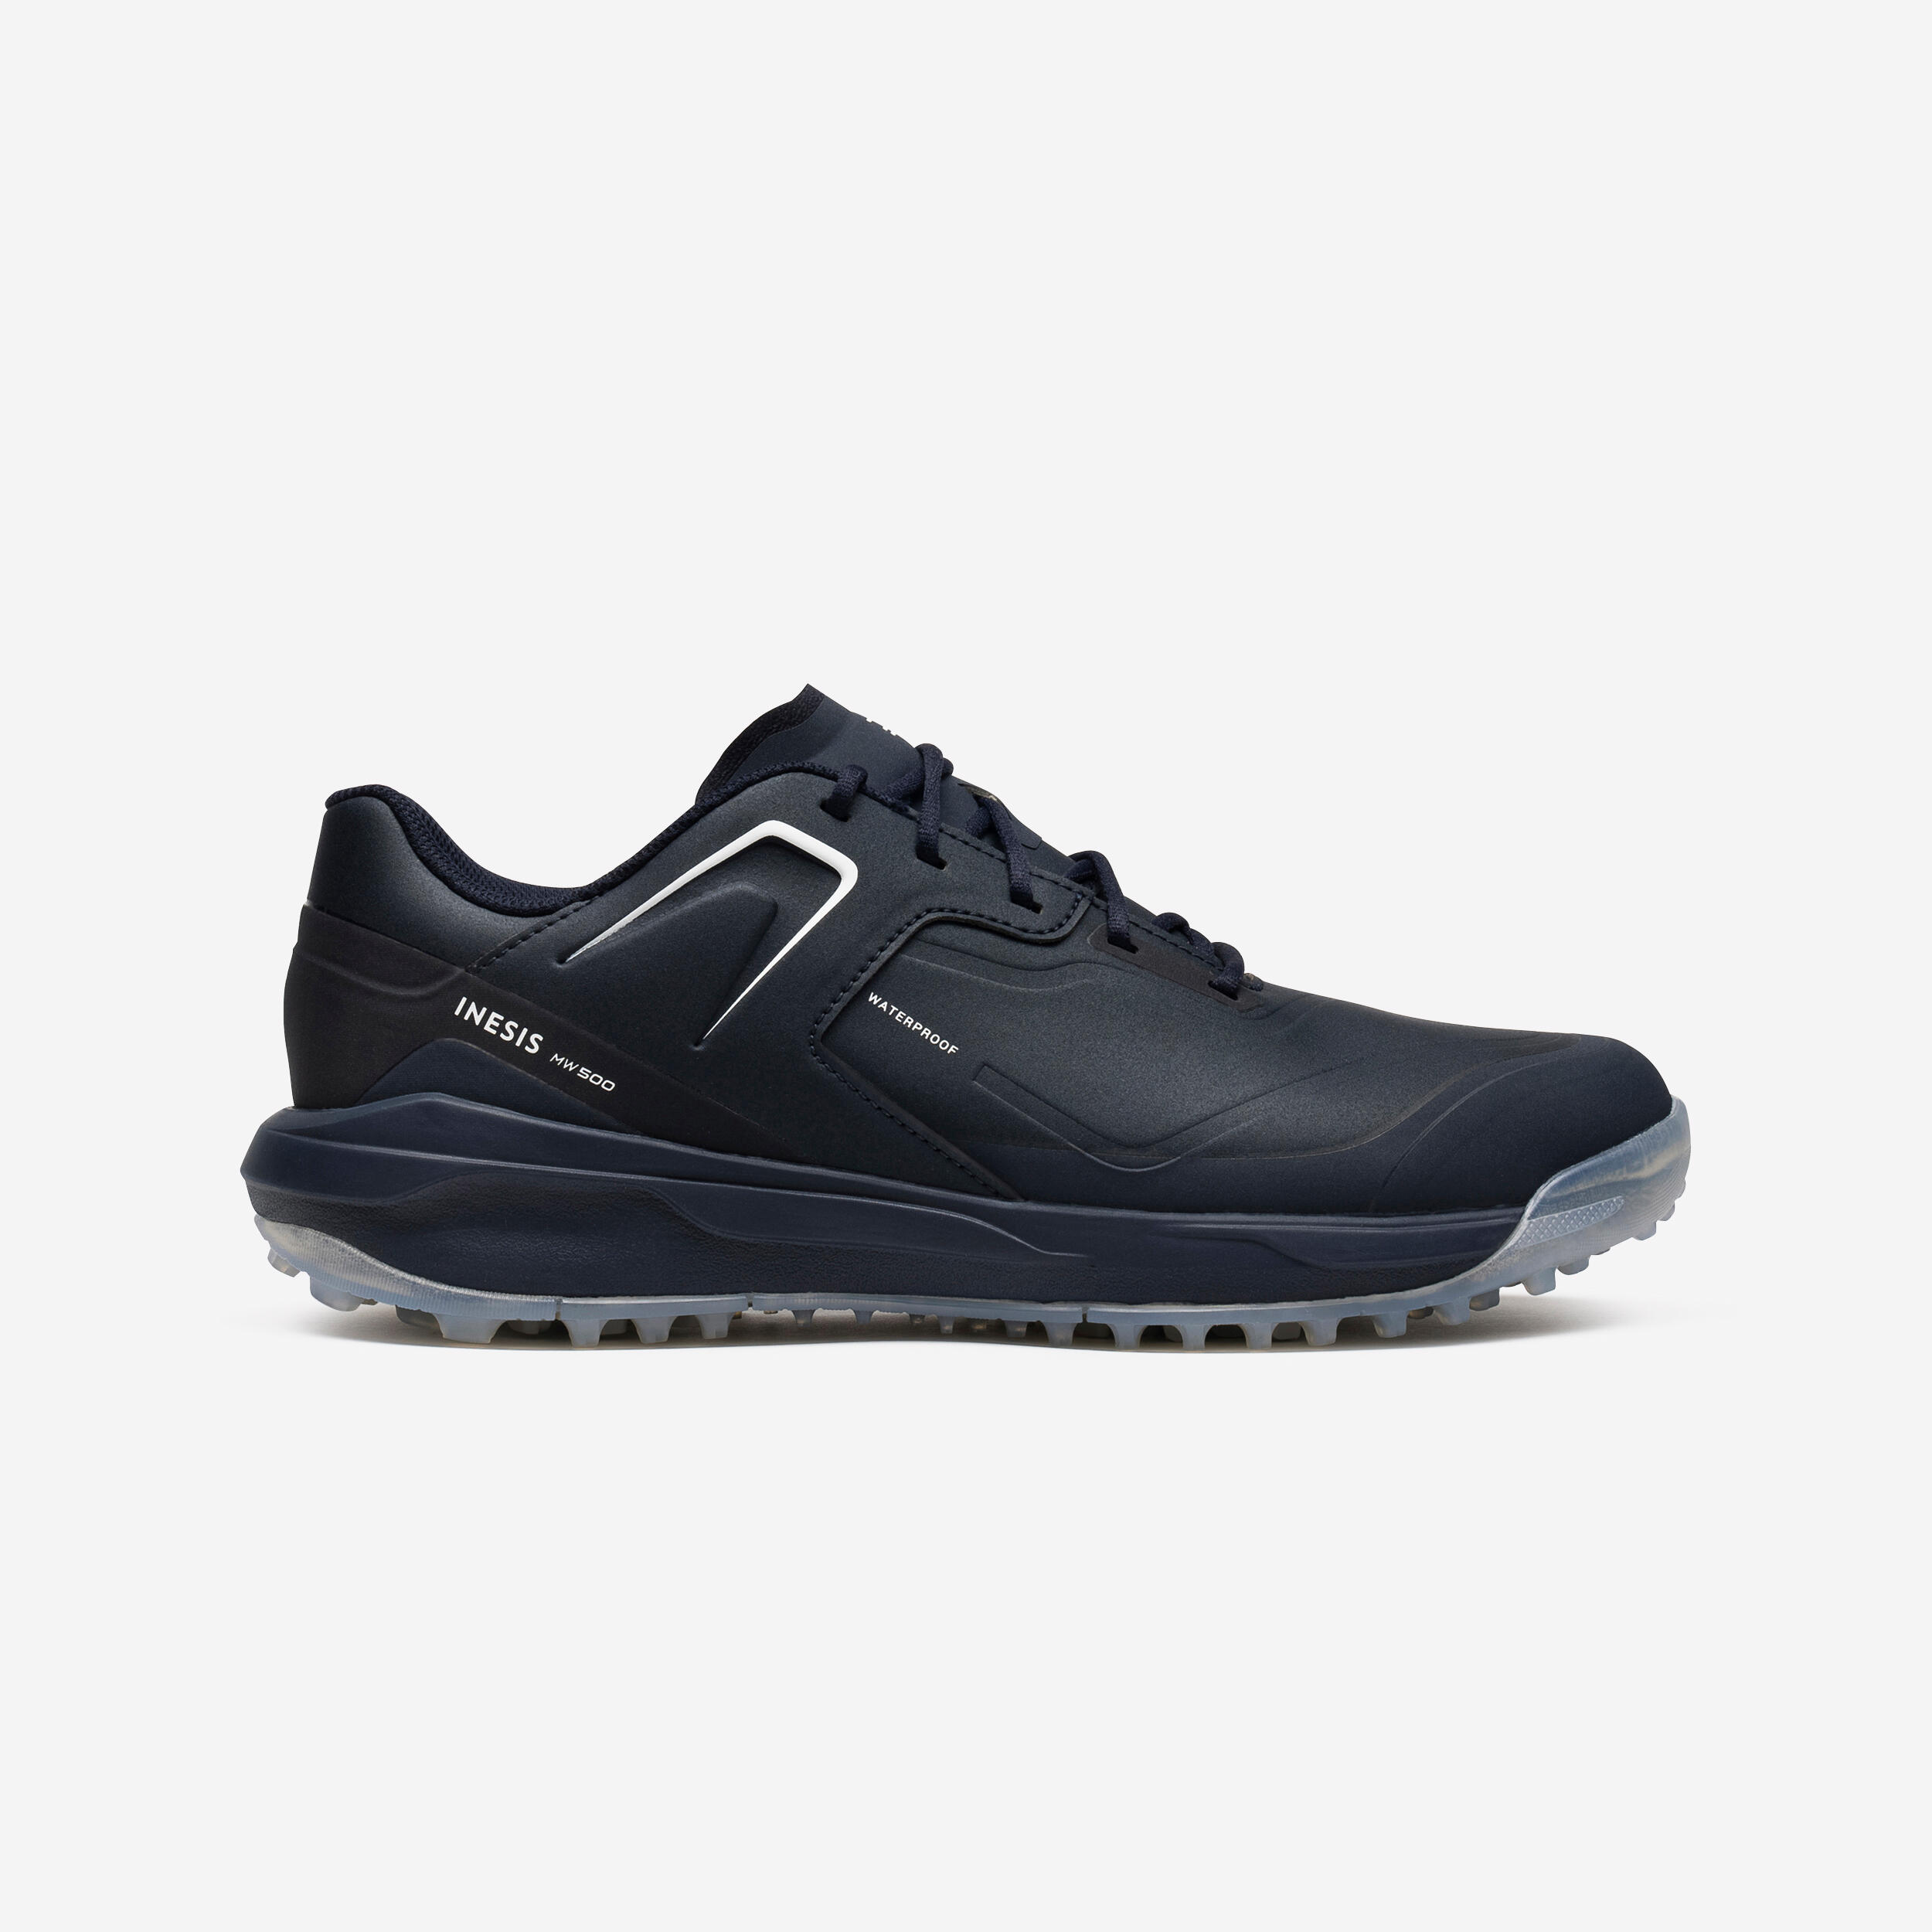 Men's golf waterproof shoes - MV 500 navy 1/7